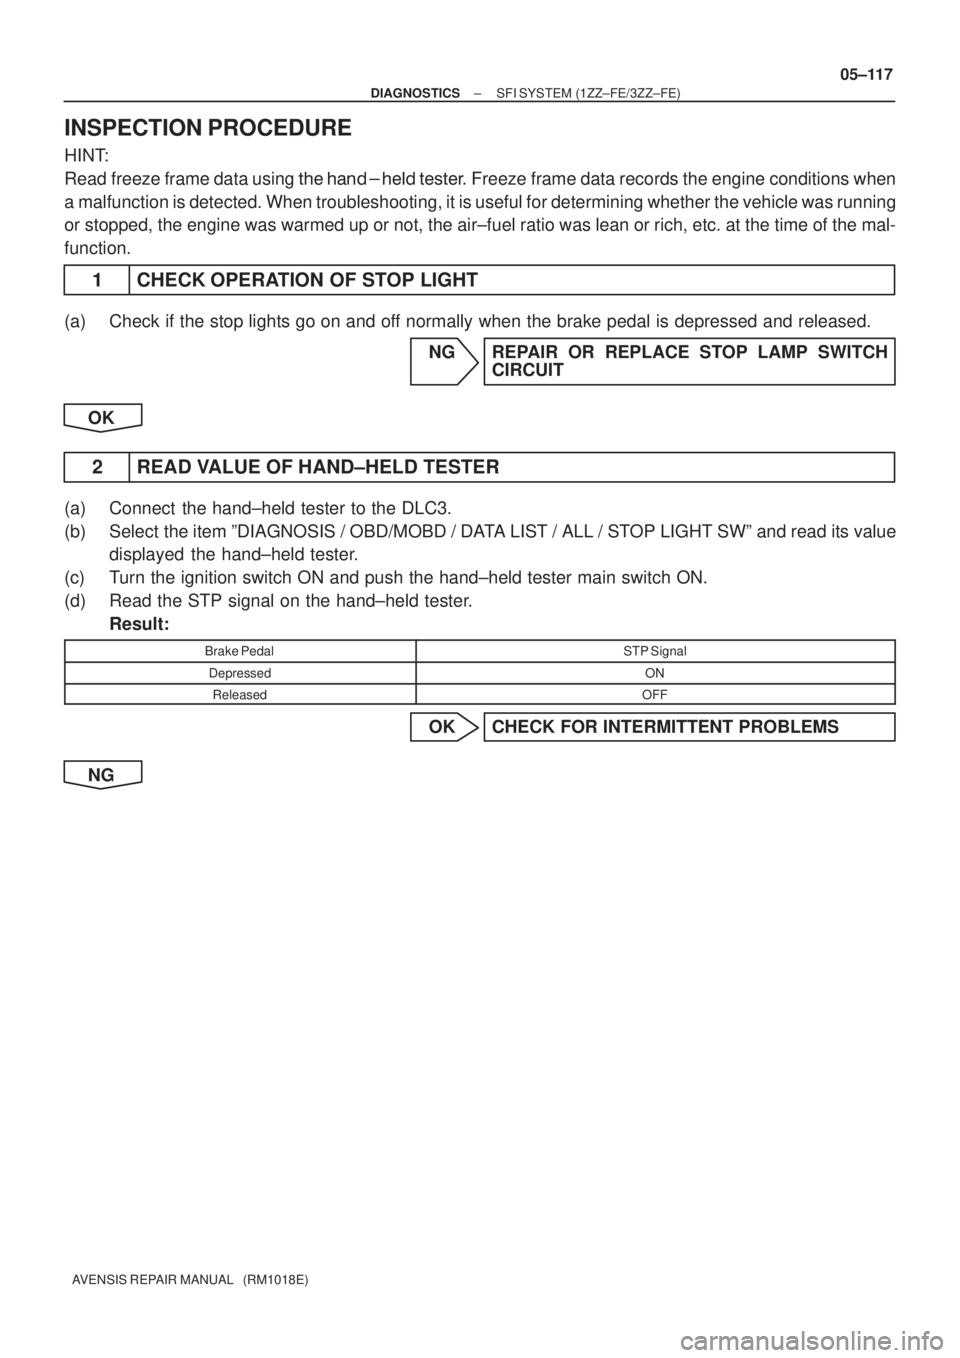 TOYOTA AVENSIS 2005  Service Repair Manual ± DIAGNOSTICSSFI SYSTEM (1ZZ±FE/3ZZ±FE)
05±117
AVENSIS REPAIR MANUAL   (RM1018E)
INSPECTION PROCEDURE
HINT:
Read freeze frame data using  	 
 Freeze frame data records the engine 